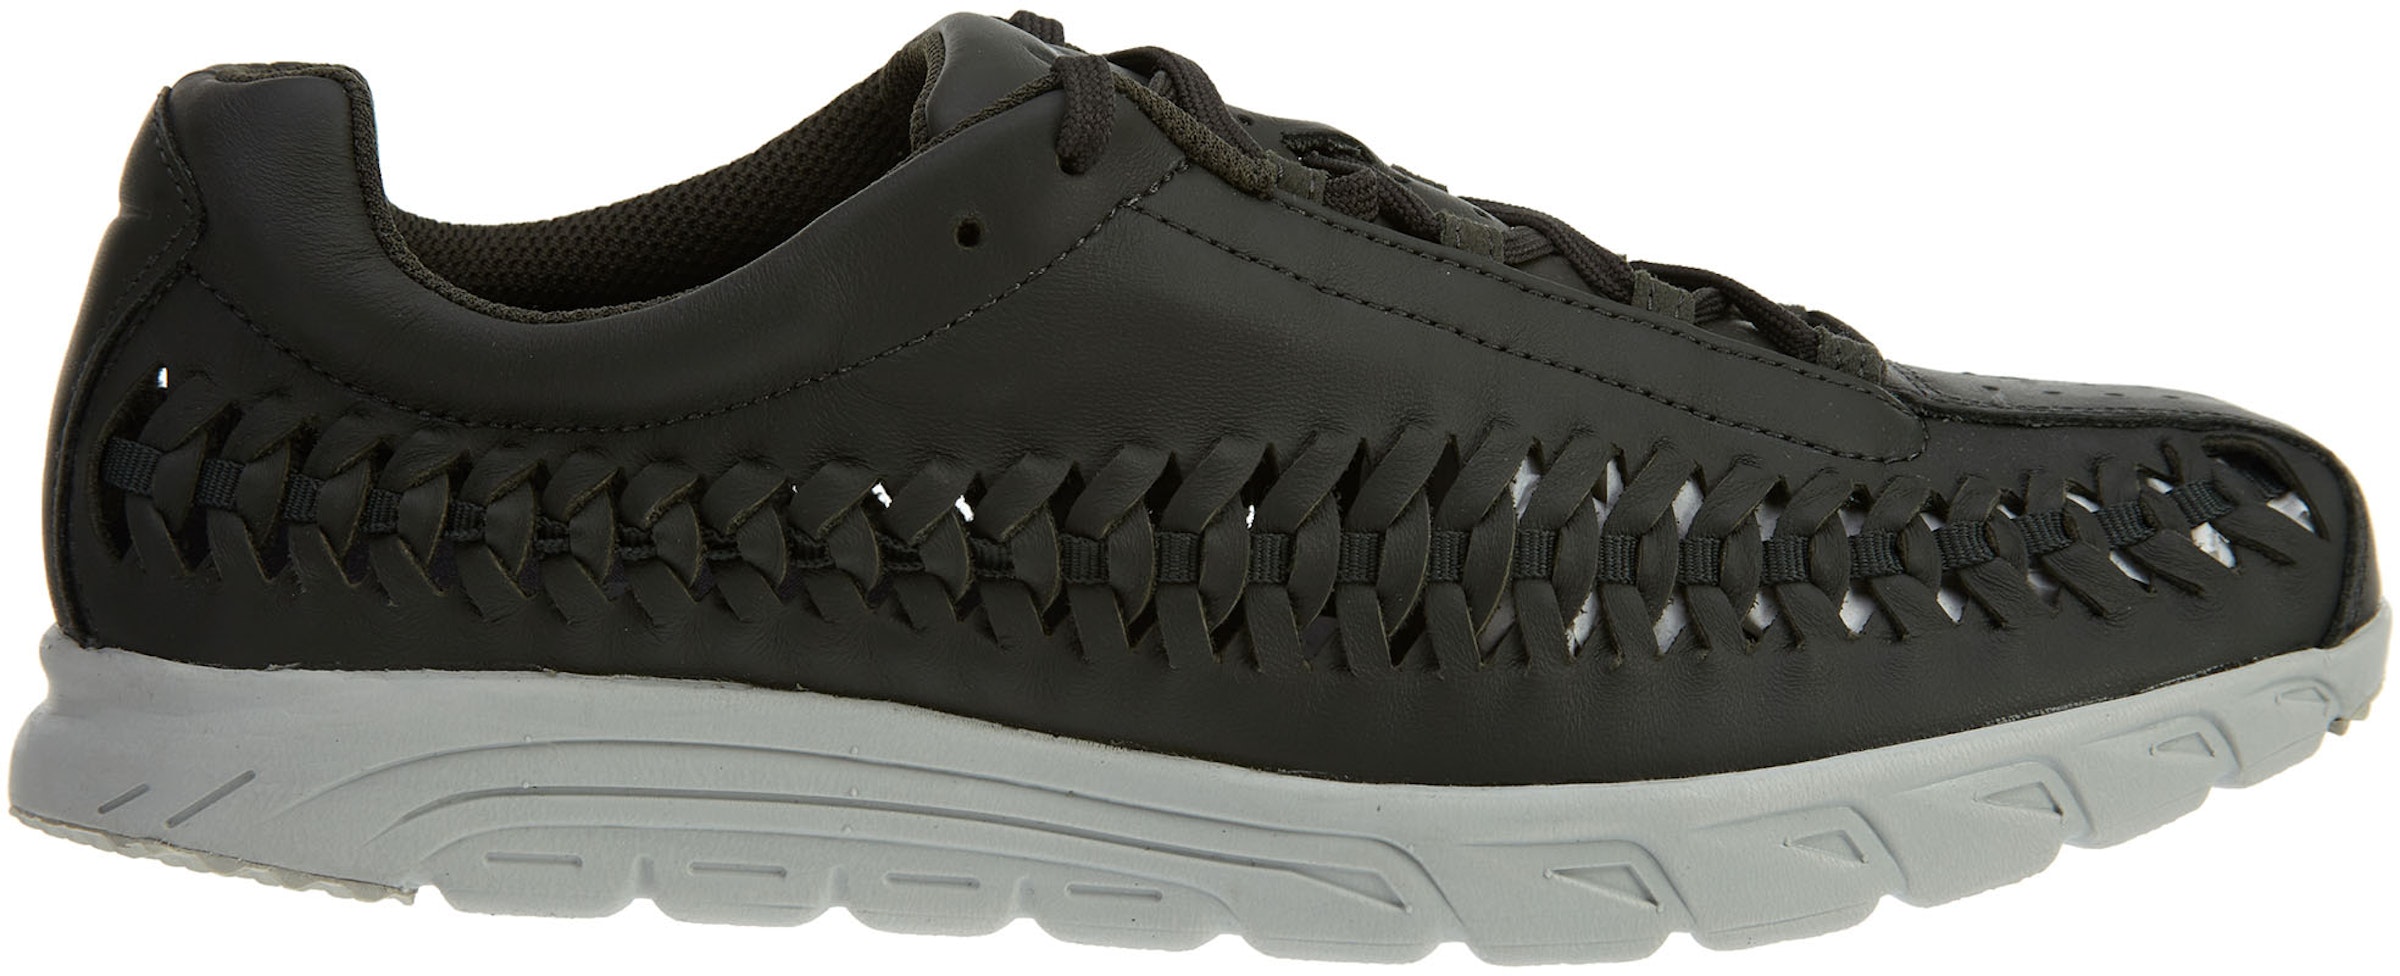 Nike Mayfly Woven Grey-Black Men's - 833132-302 -